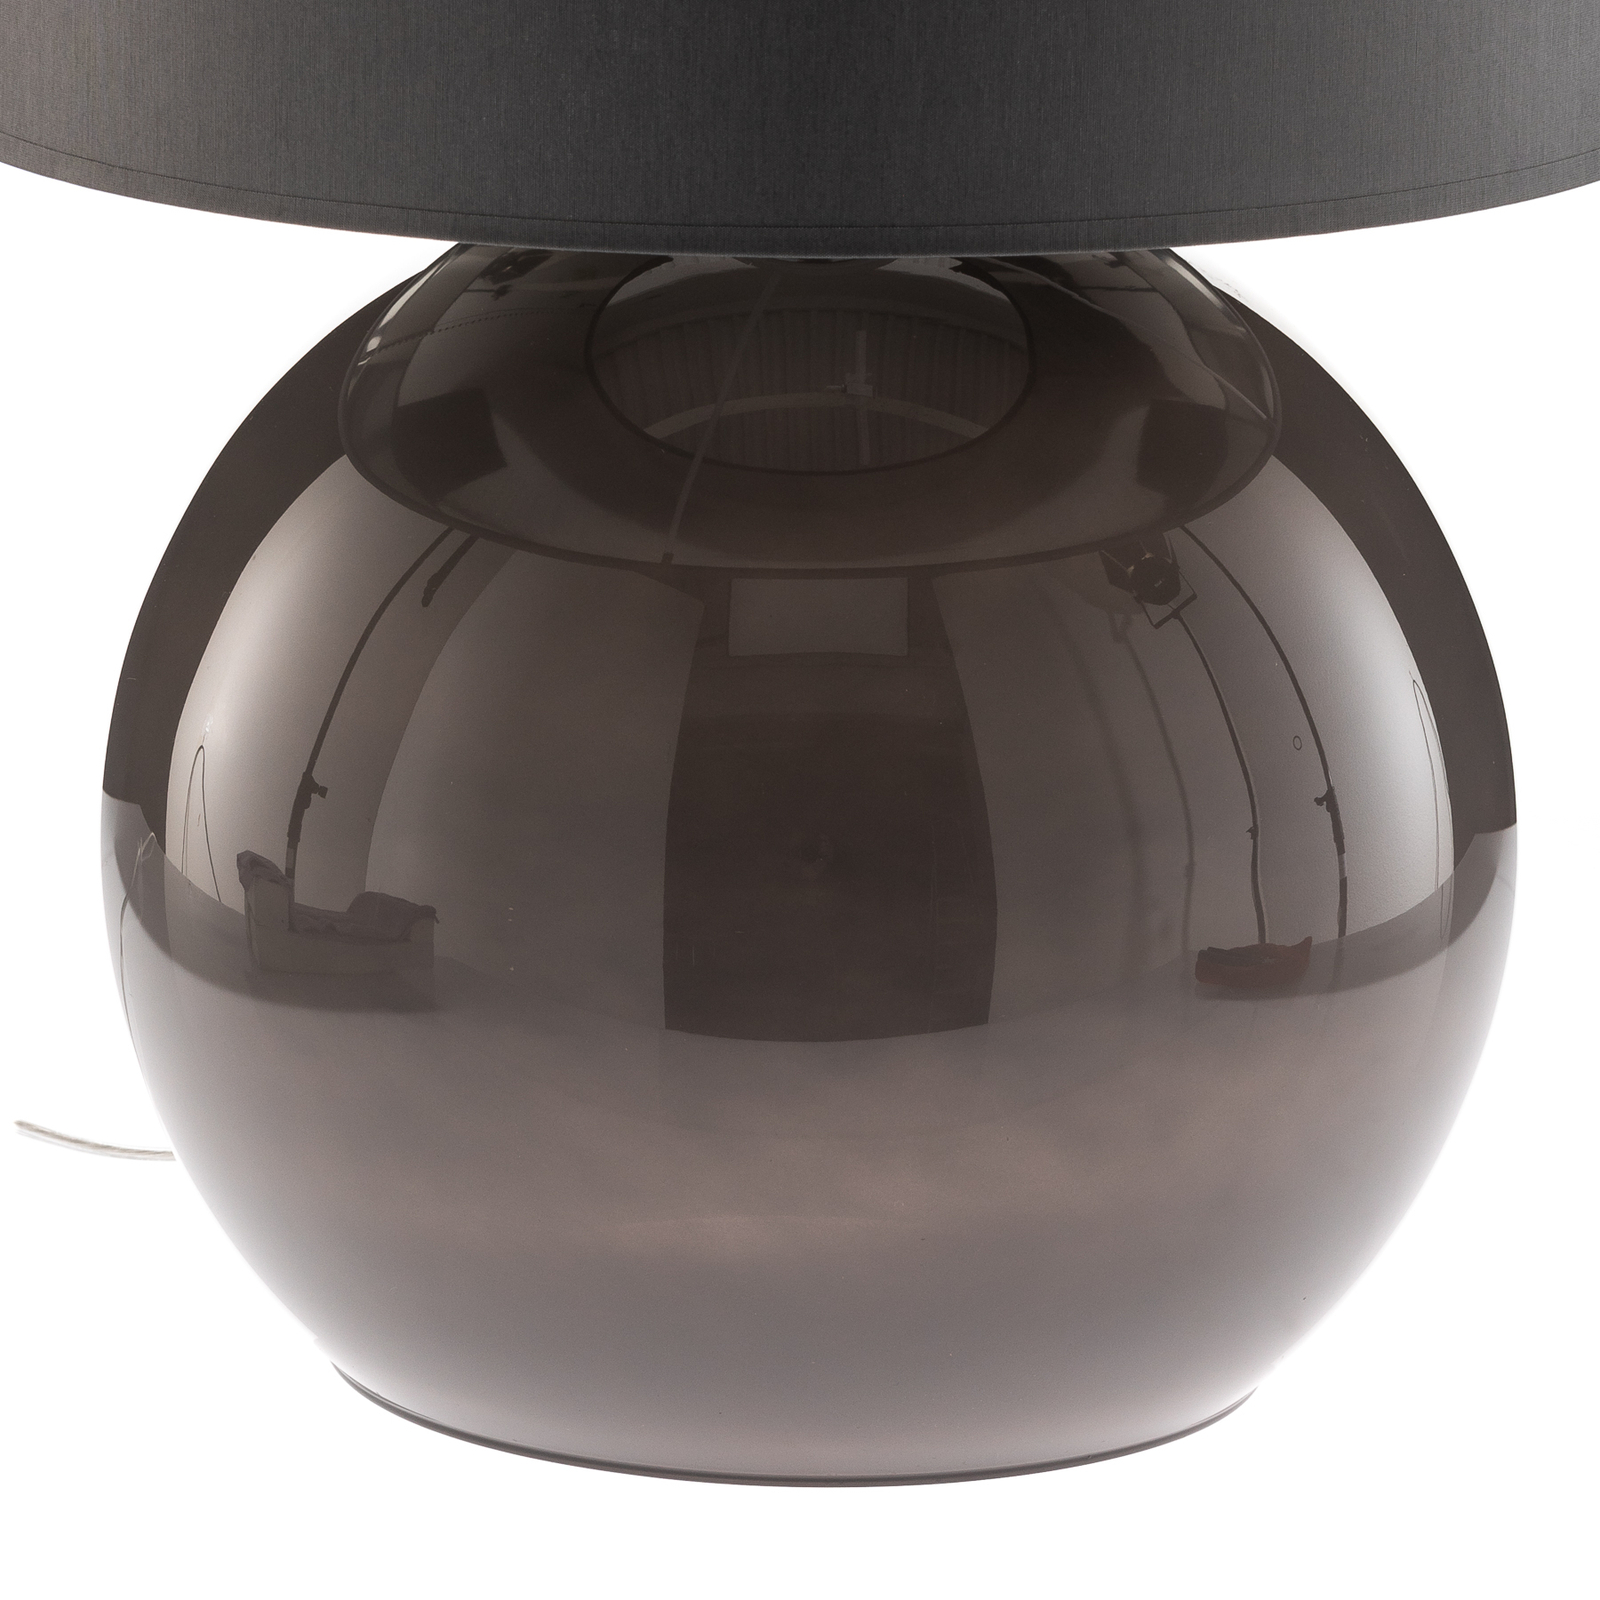 Palla bordlampe, Ø 36 cm, grå/grafit